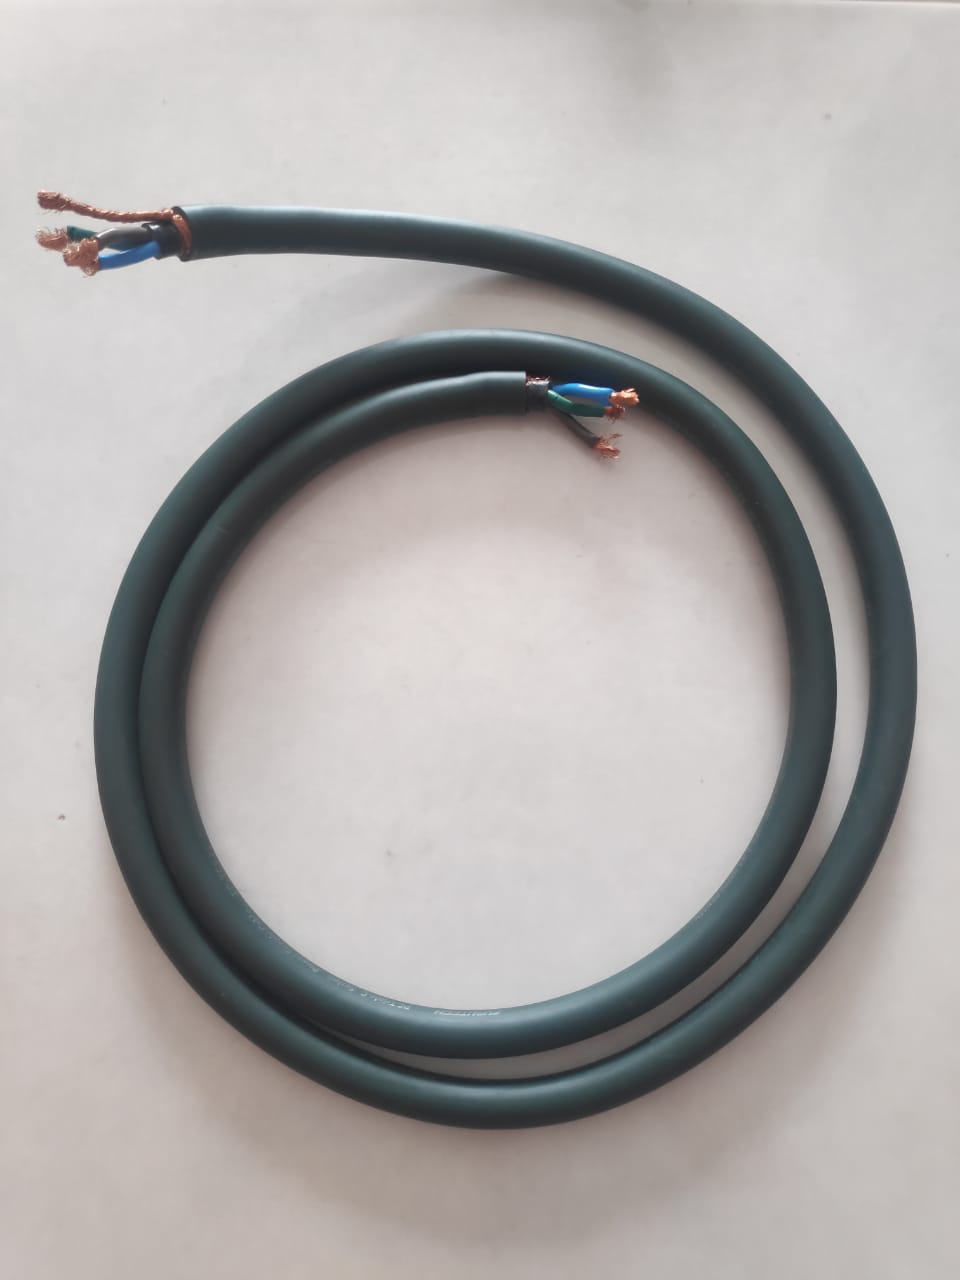 Furutech fp-tcs21 power cord (Sold)  Img-2198